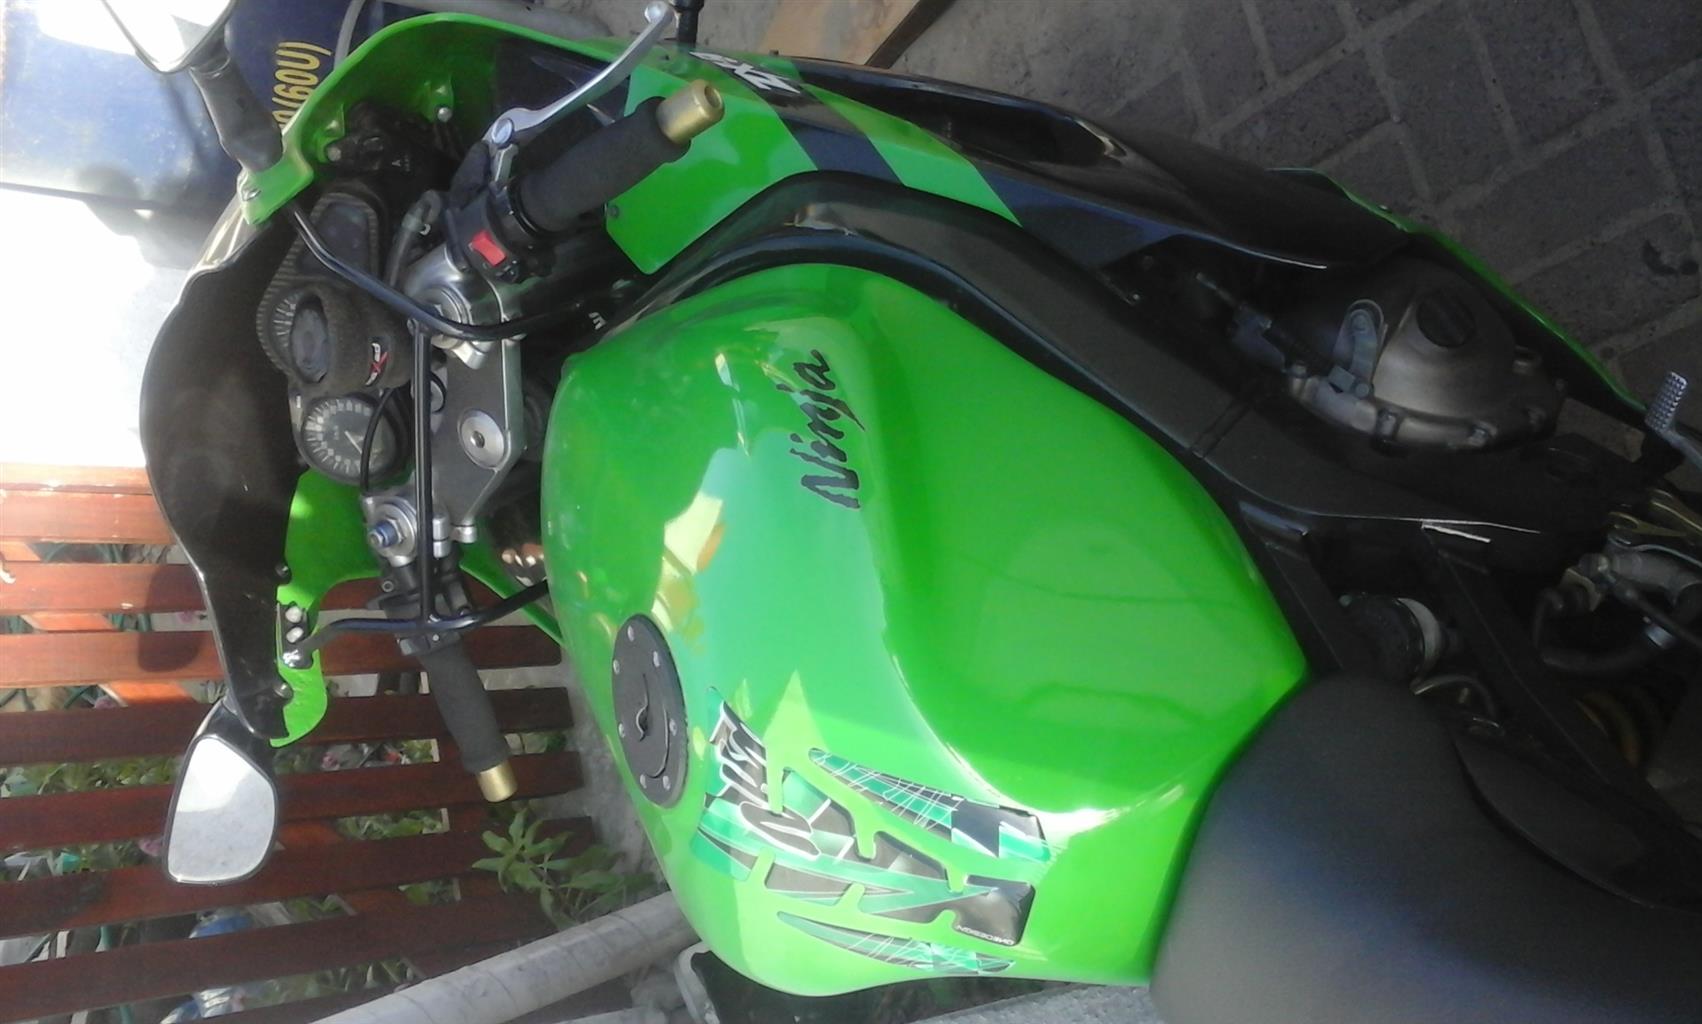 1999 Kawasaki Ninja